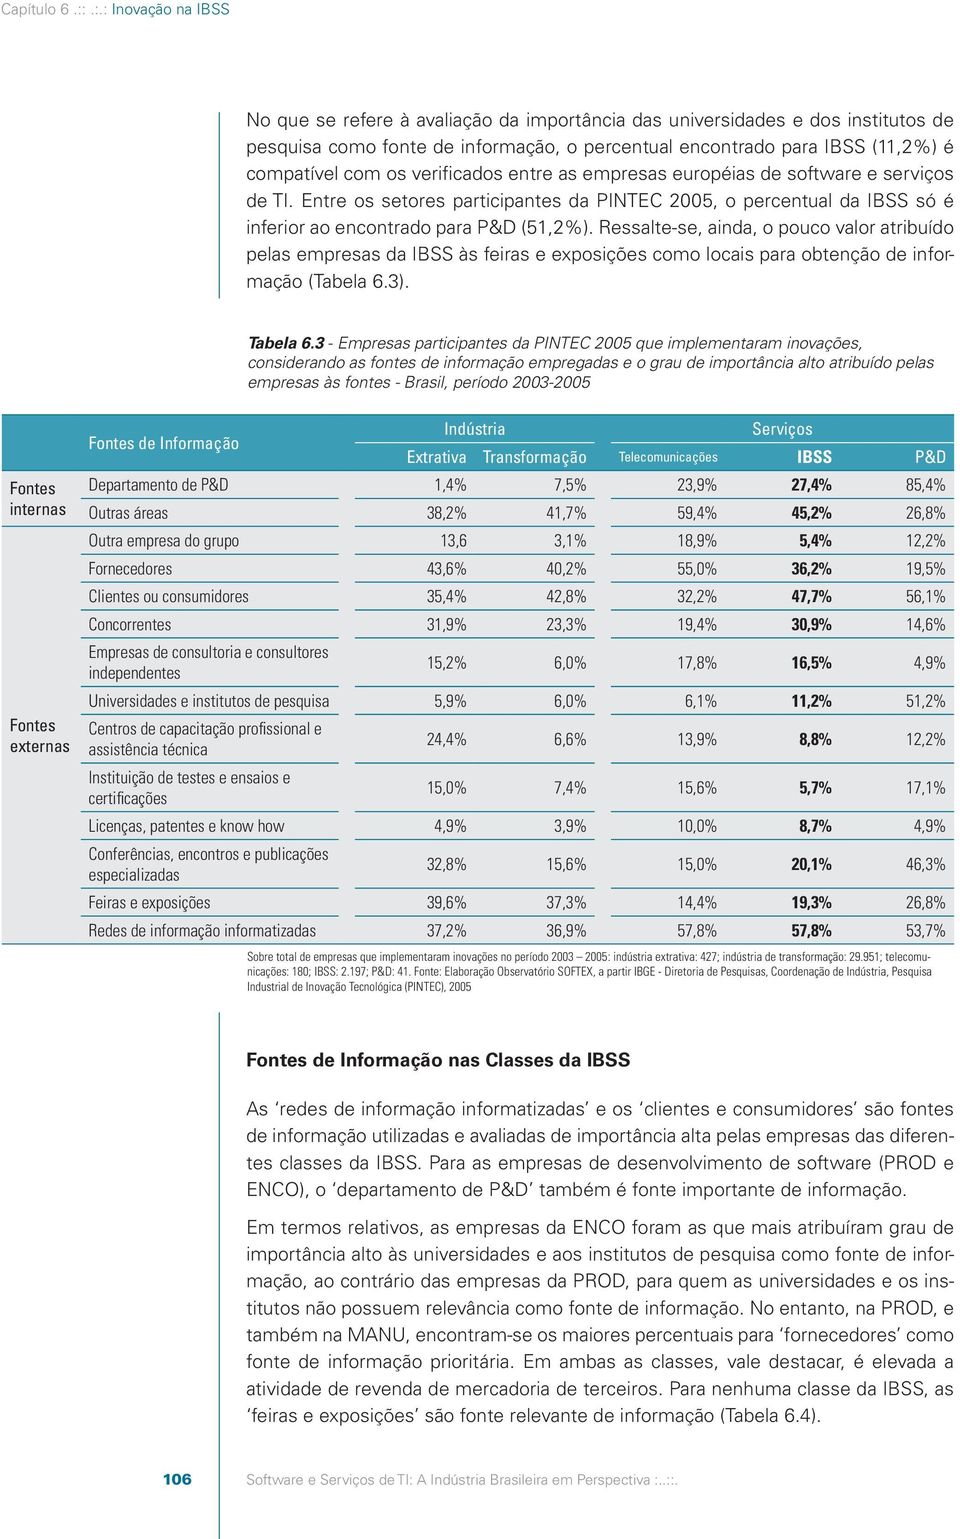 os verificados entre as empresas européias de software e serviços de TI. Entre os setores participantes da PINTEC 2005, o percentual da IBSS só é inferior ao encontrado para P&D (51,2%).